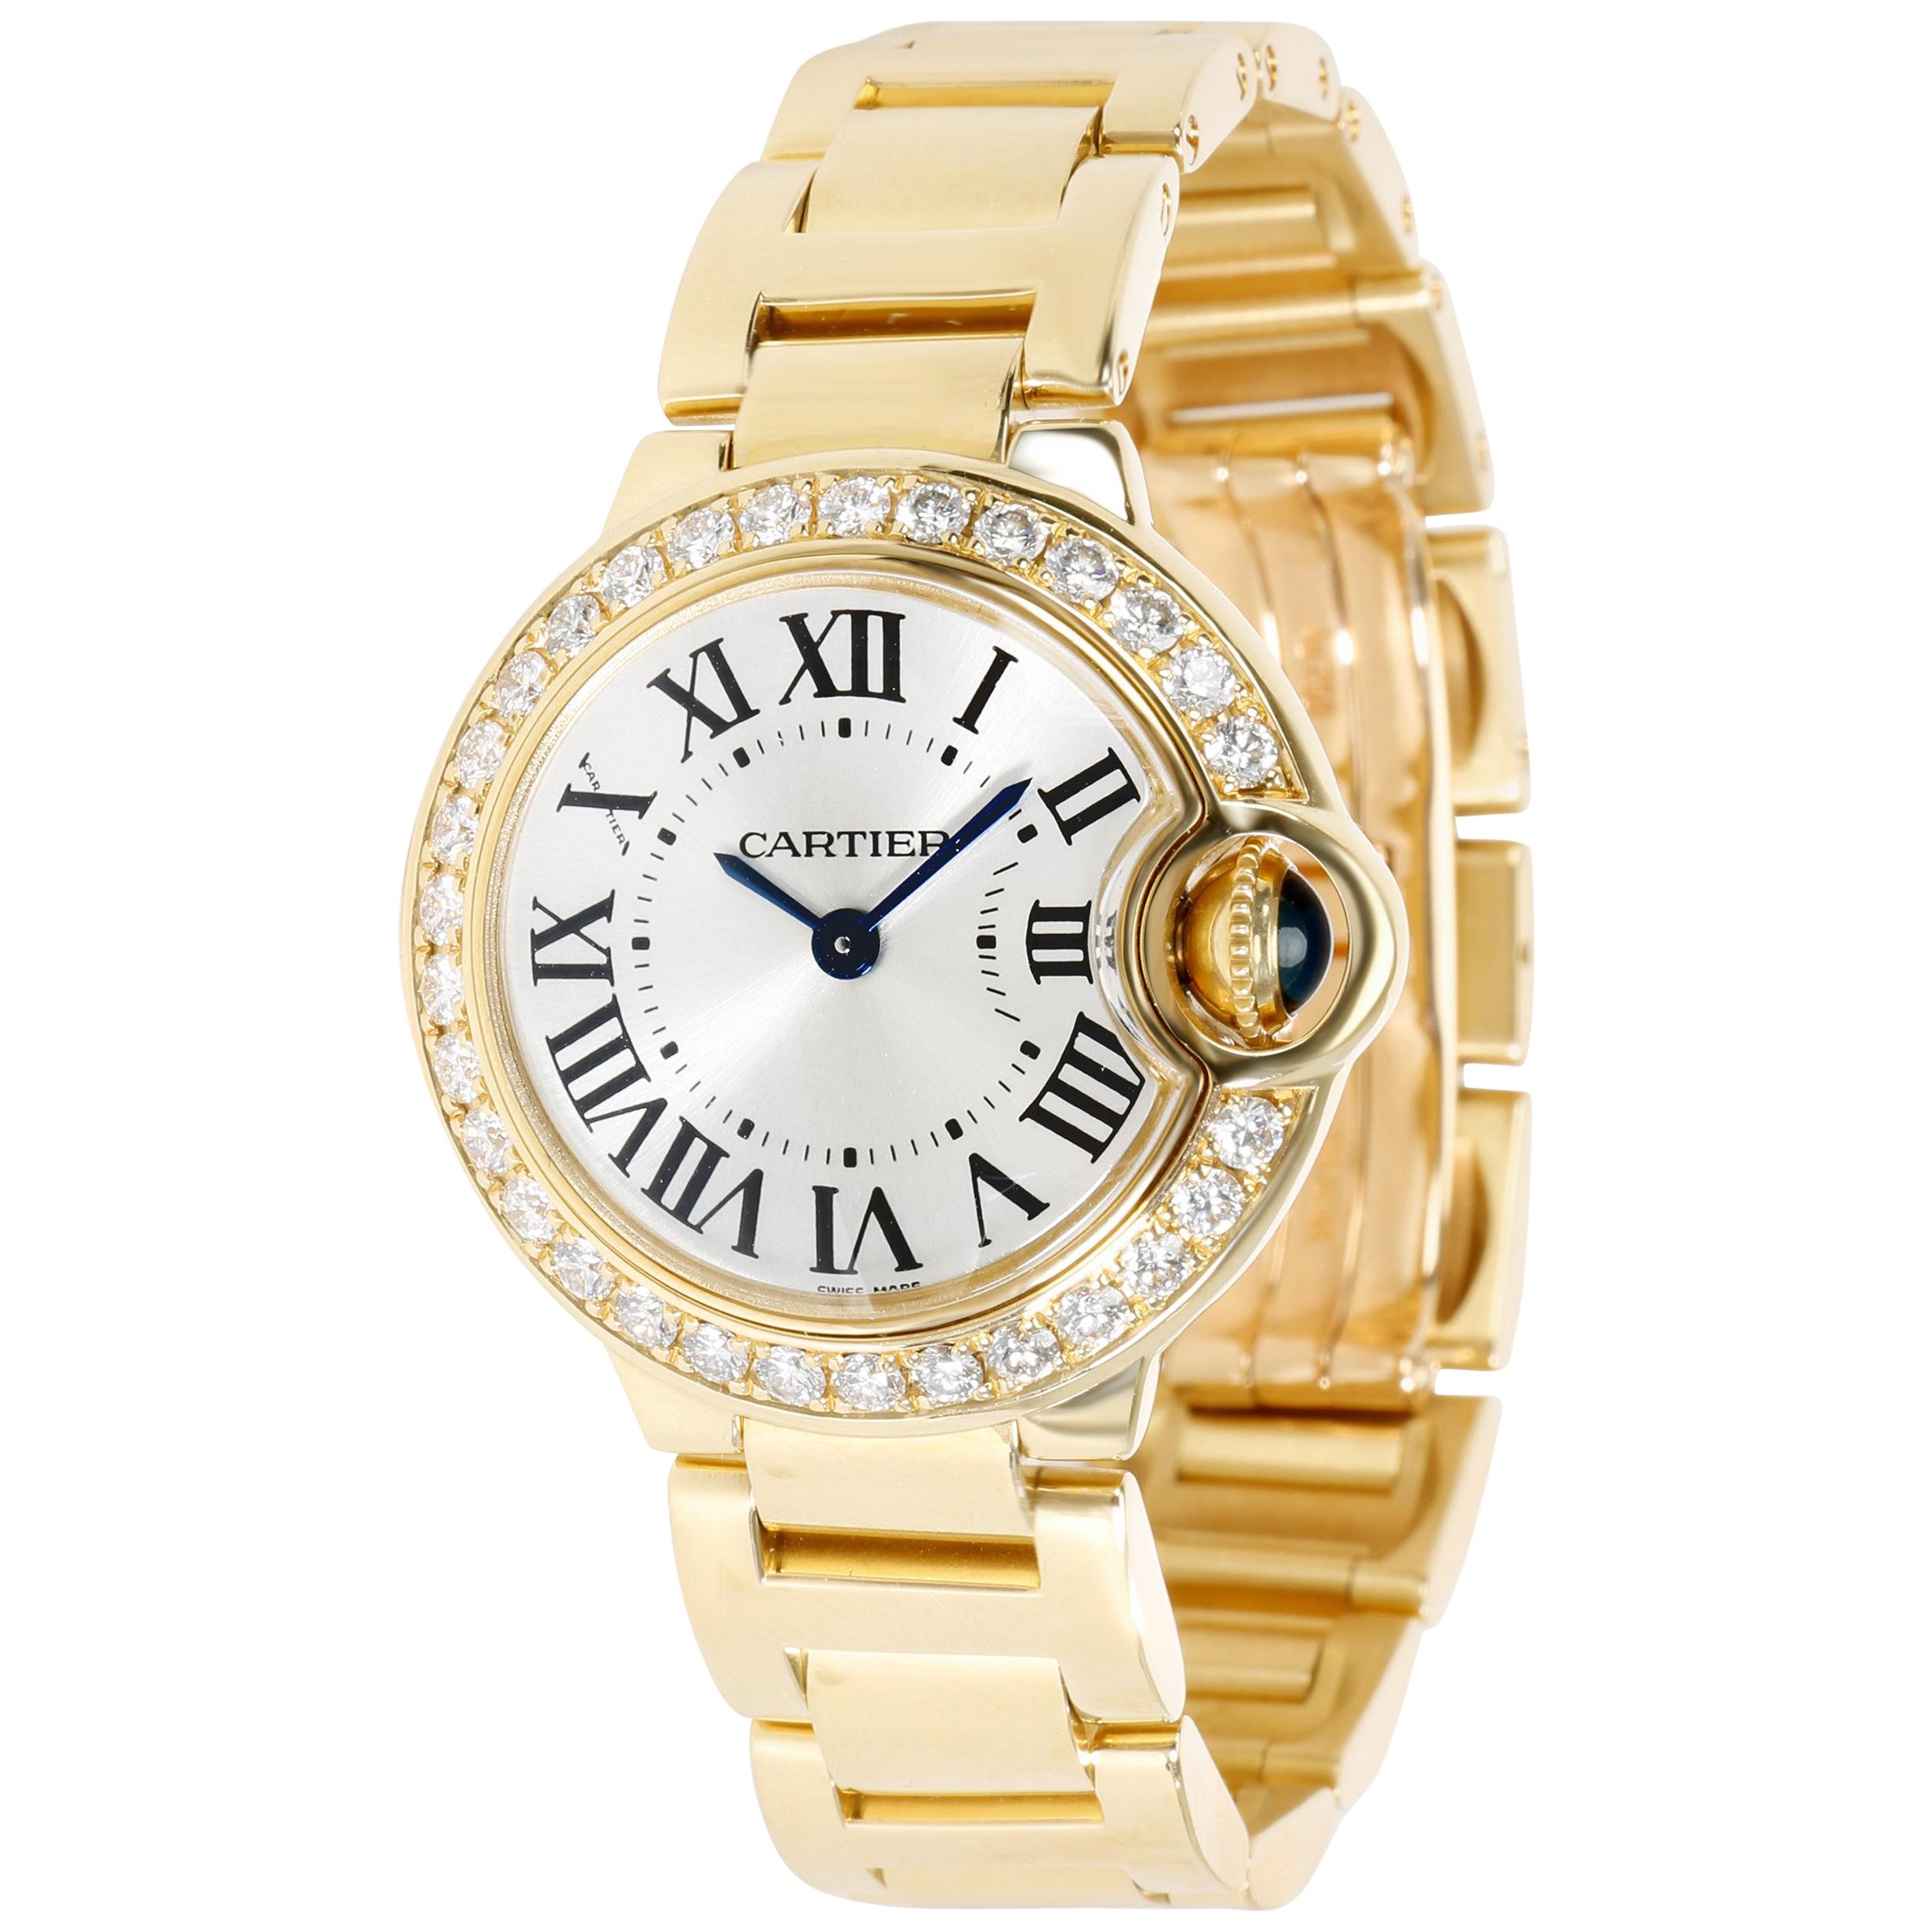 Unworn Cartier Ballon Bleu WE9001Z3 Women's Watch in 18 Karat Yellow Gold